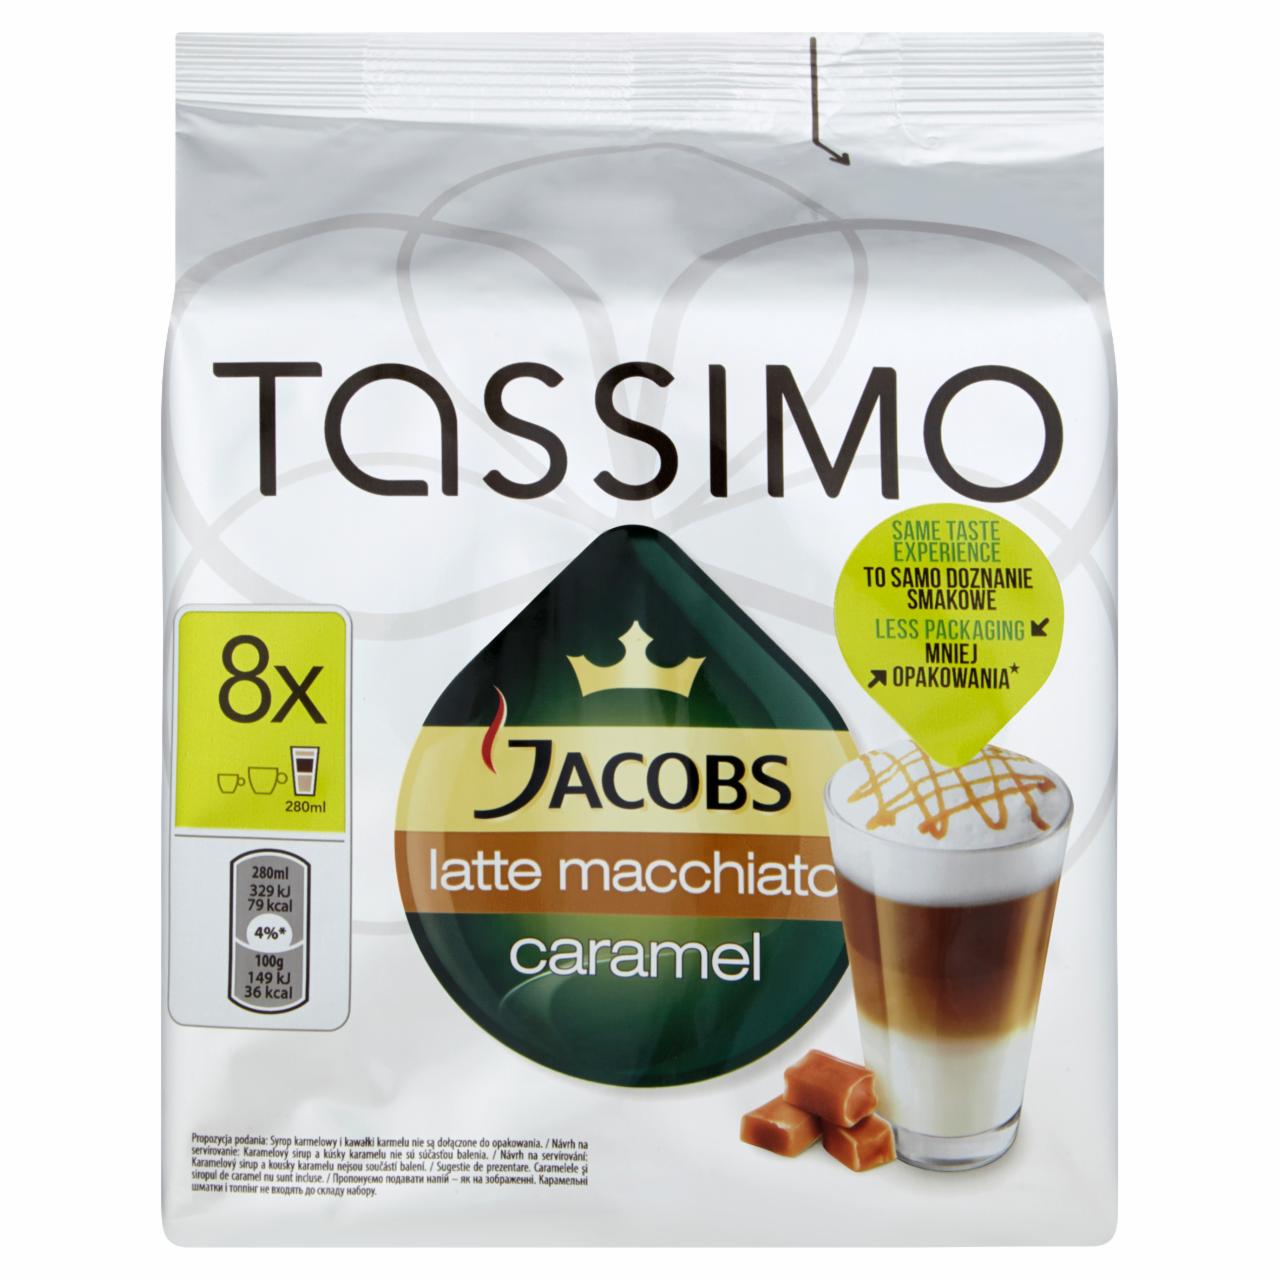 Zdjęcia - Tassimo Jacobs Latte Macchiato Caramel Kawa mielona 8 kapsułek śmietanka z cukrem 8 kapsułek 268 g